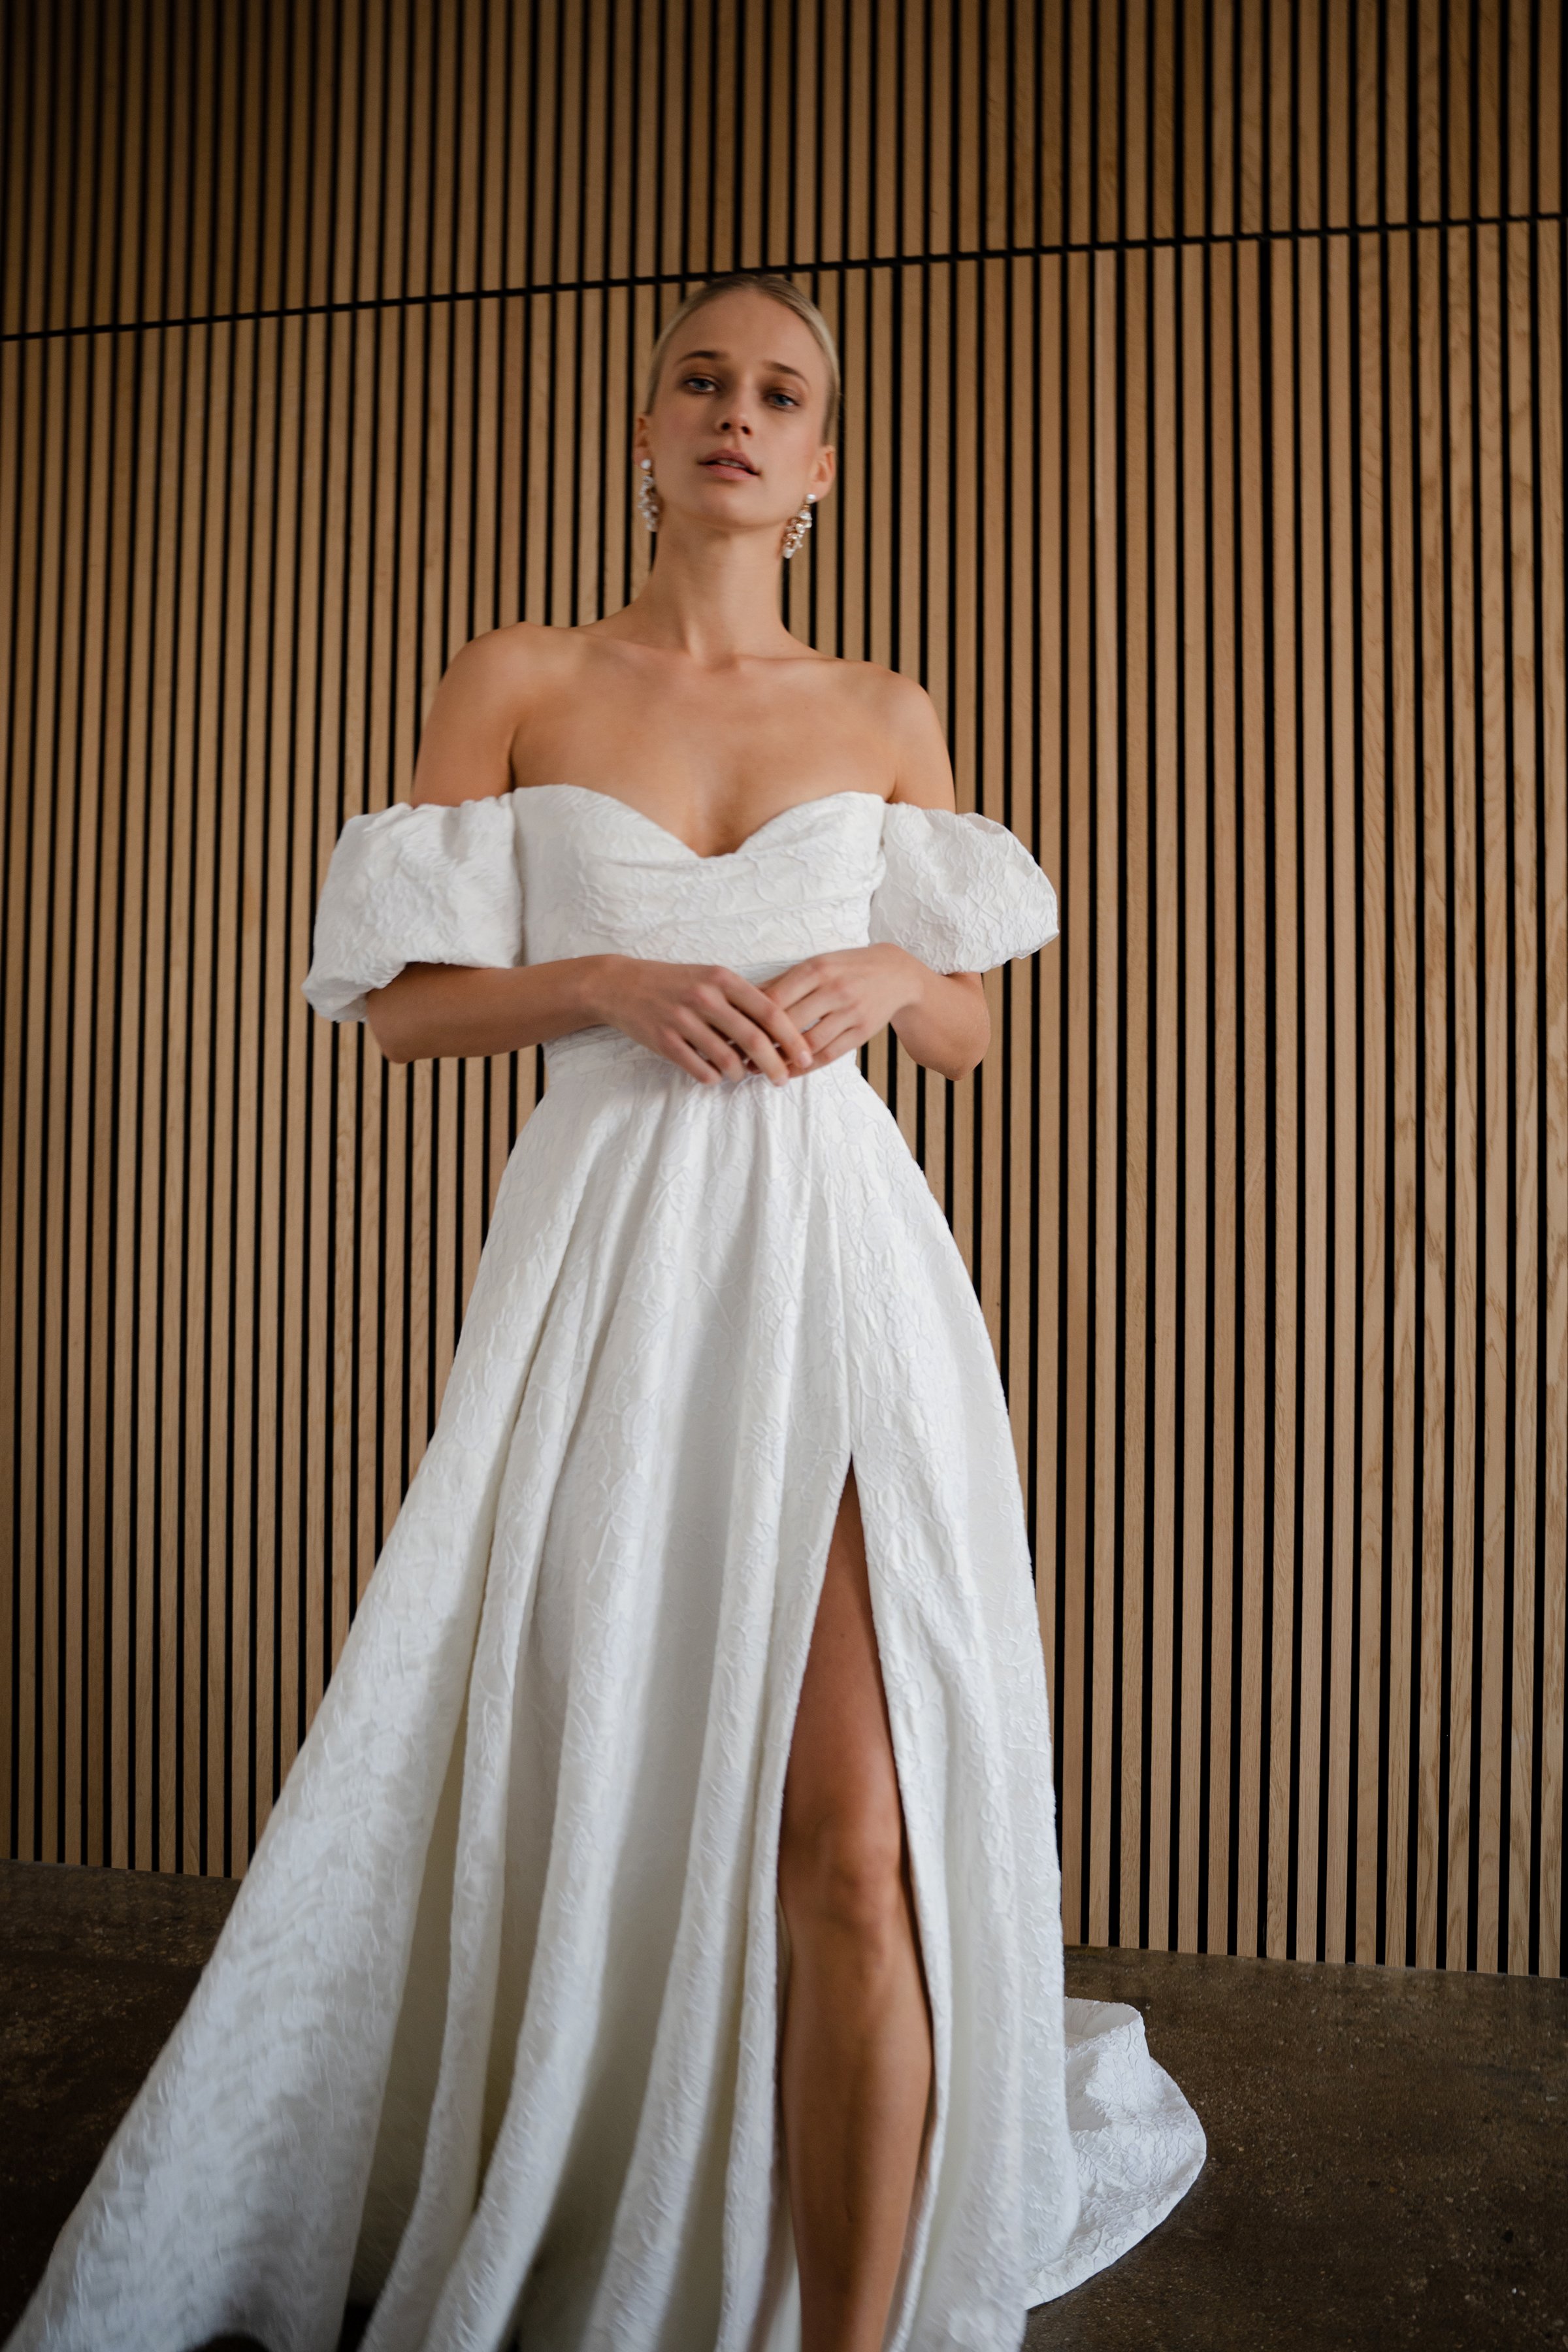 blanc-de-blanc-bridal-boutique-pittsburgh-cleveland-dress-wedding-gown-jenny-yoo-beau.jpg